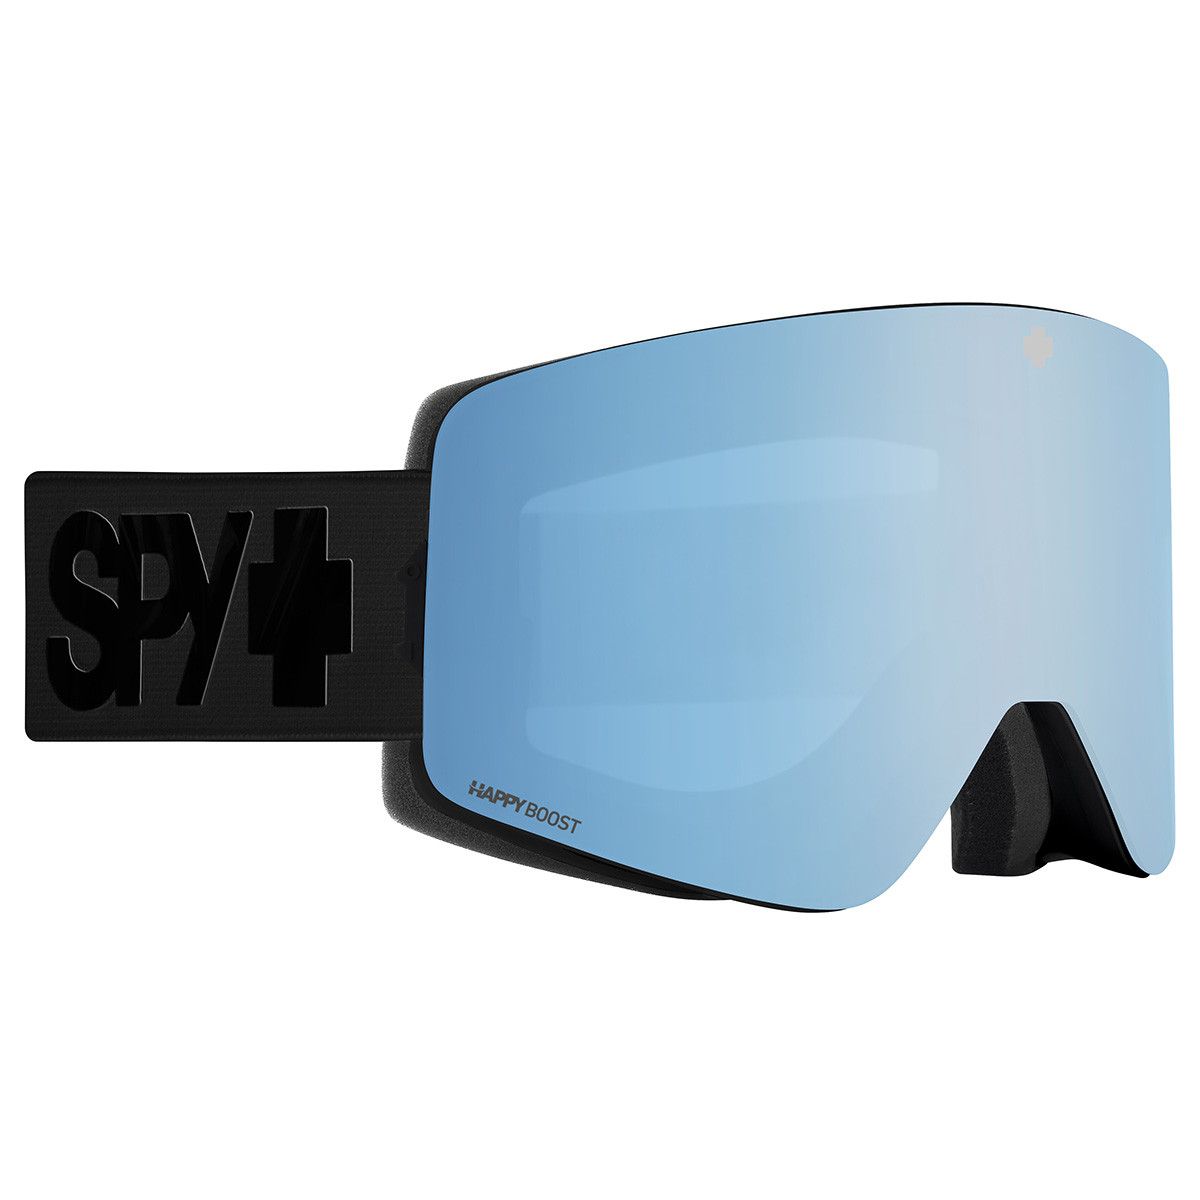 Masque de Ski Marauder - Matte Black  -Happy Boost Bronze Happy Blue Spectra Mirror + Happy Boost LL Gray Green Red Spectra Mirror